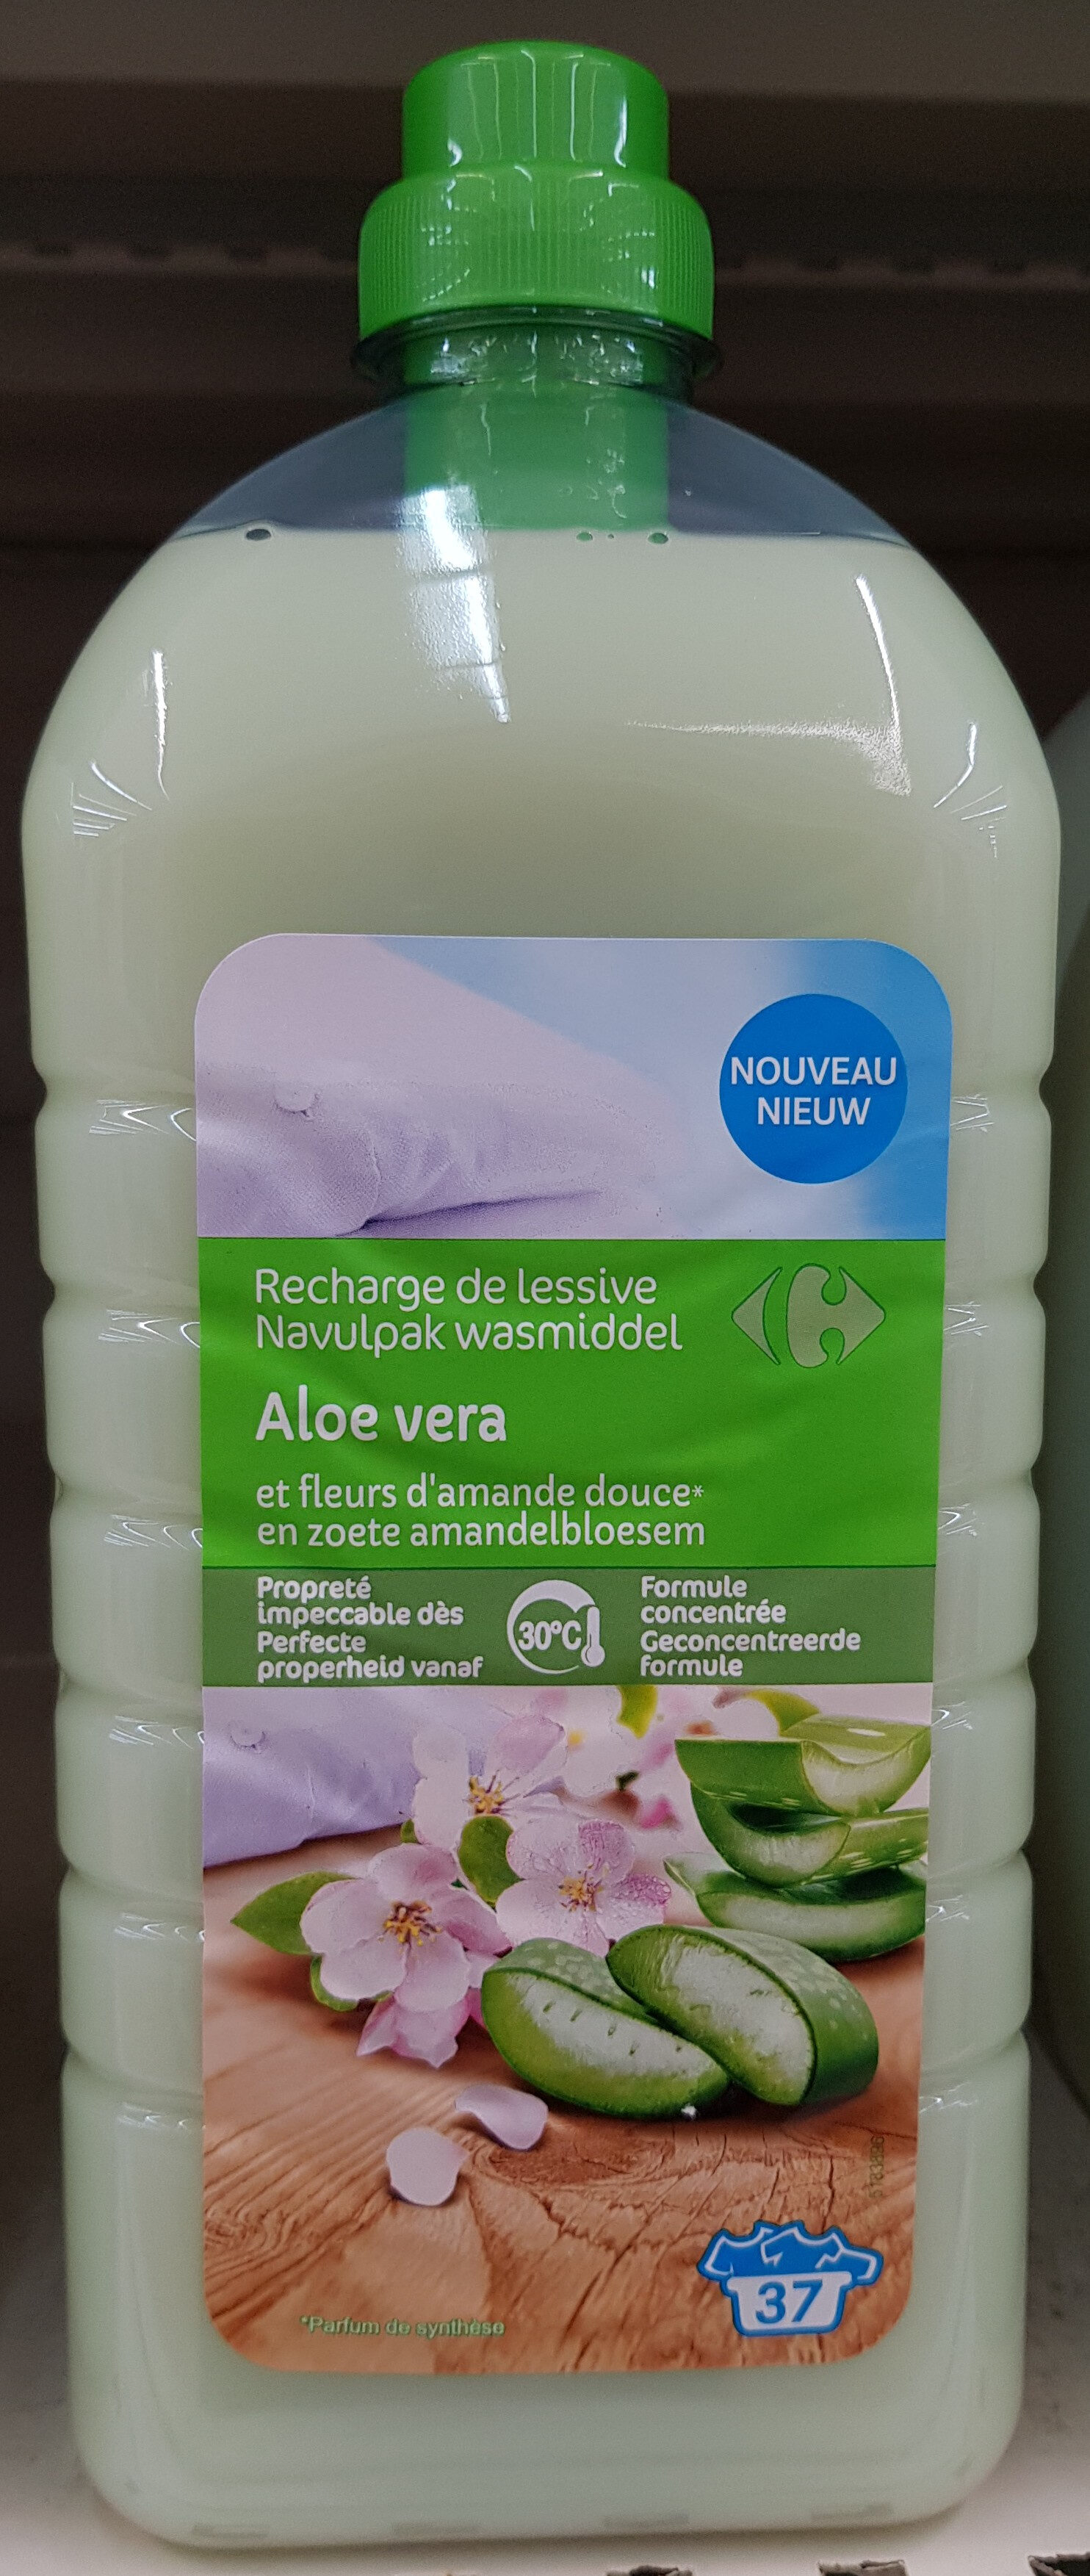 Recharge lessive Liq. Aloe vera x37 carrefour - Product - fr